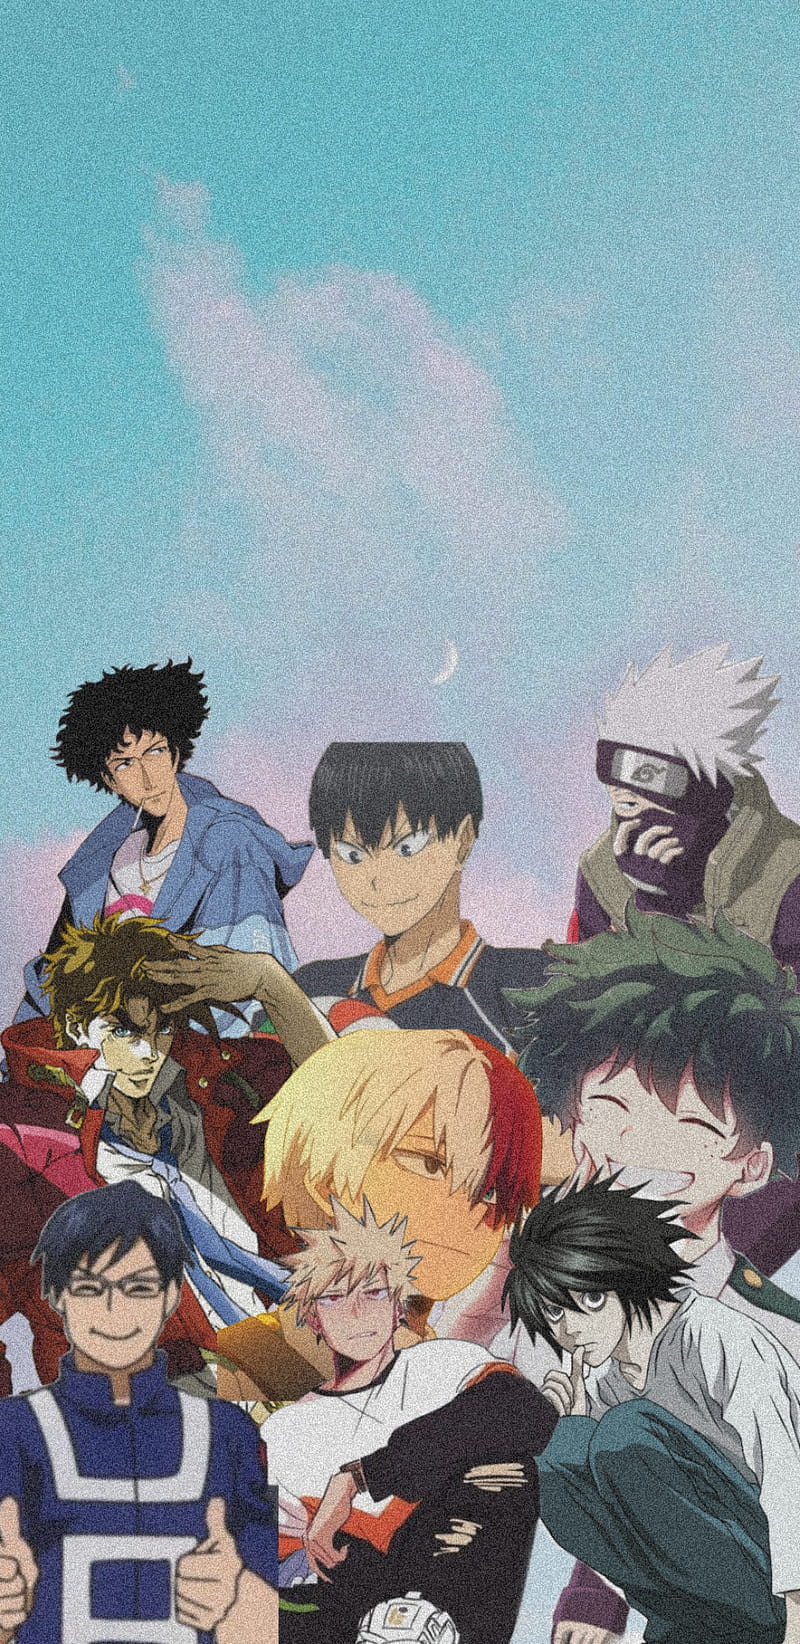 L Lawliet ryuzaki - Other & Anime Background Wallpapers on Desktop Nexus  (Image 505531)